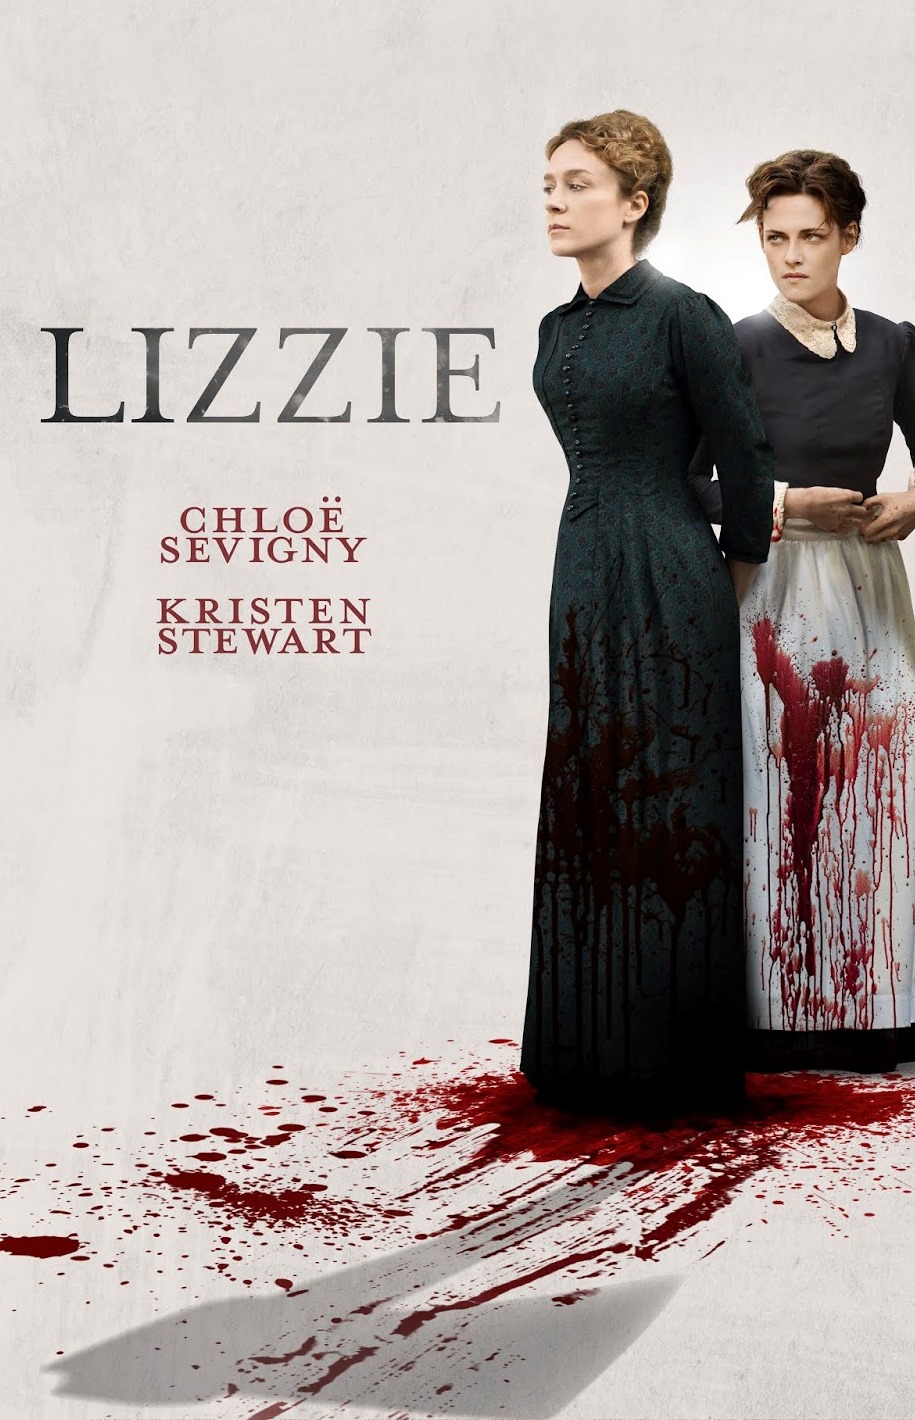 Lizzie [Sub-ITA] (2018)